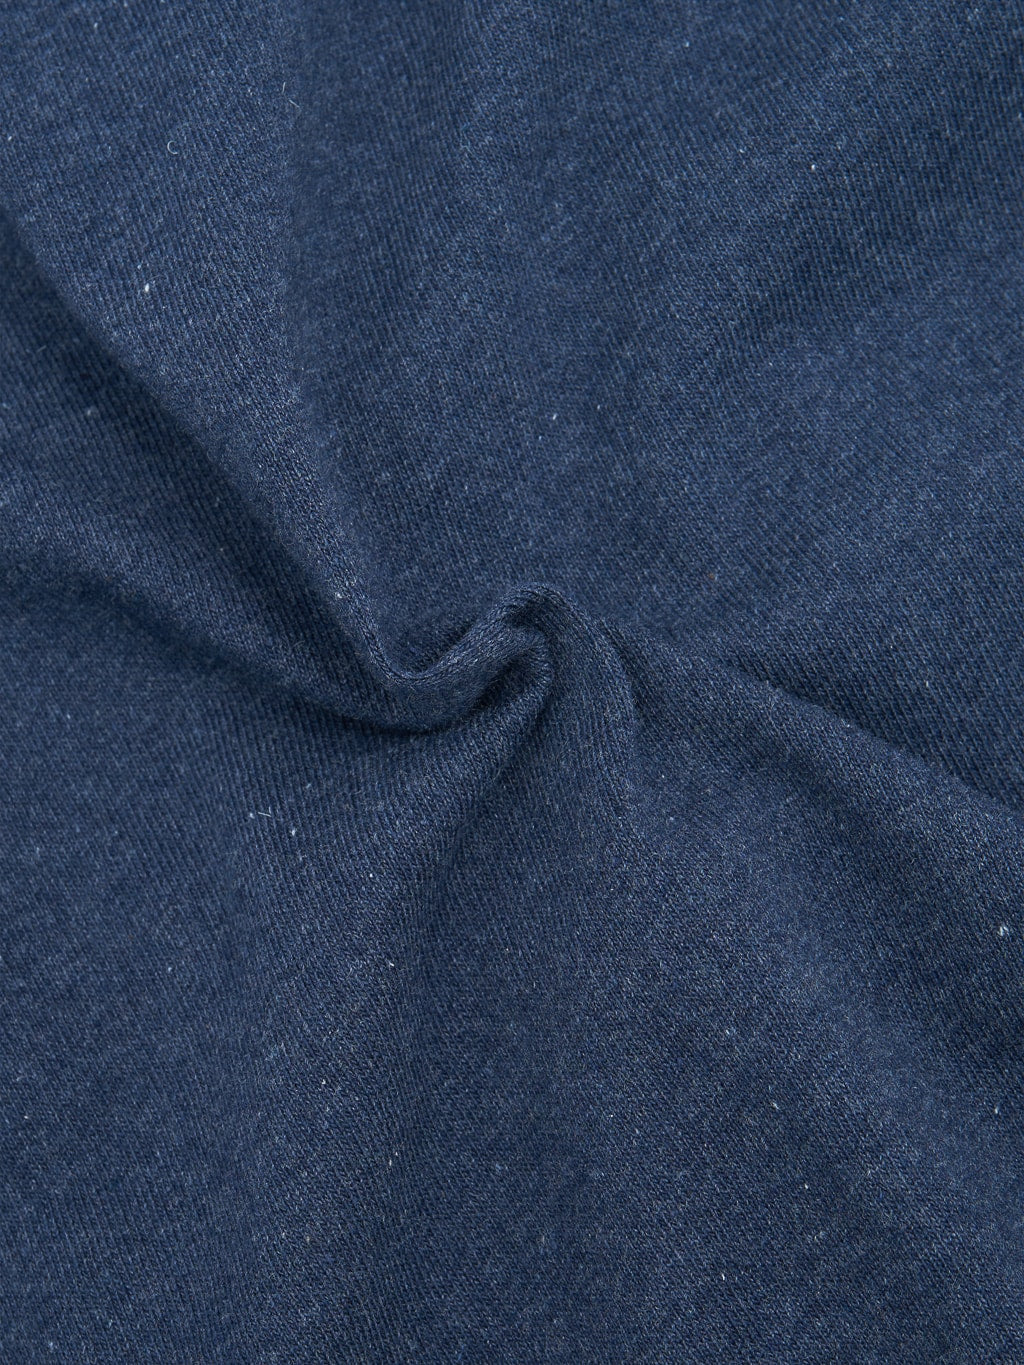 Japan Blue Recycled Denim Tshirt Dark Indigo texture